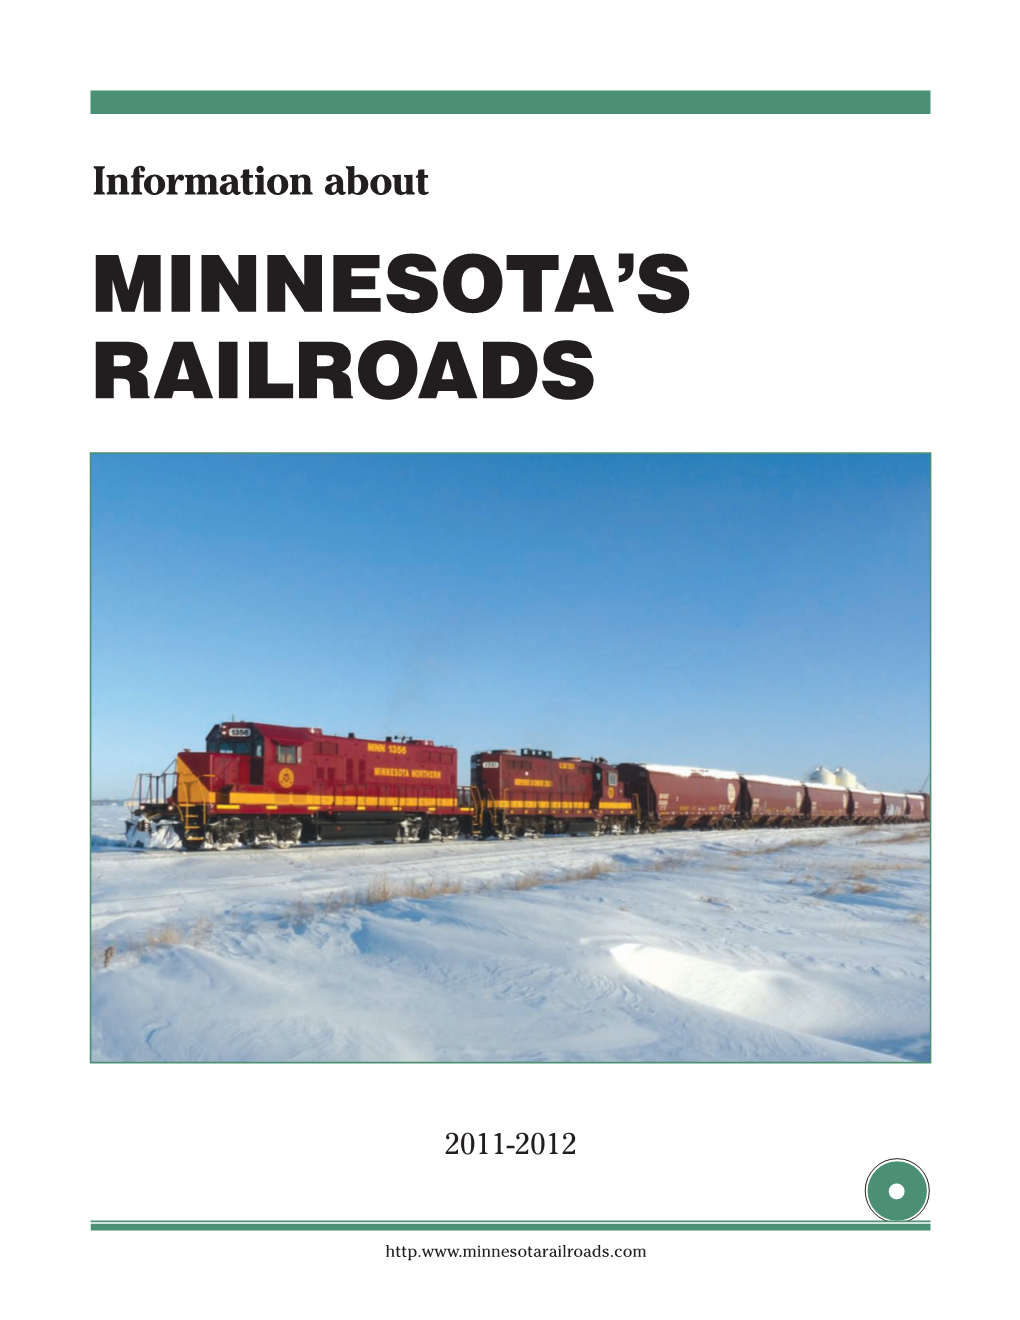 Minnesota's Railroads